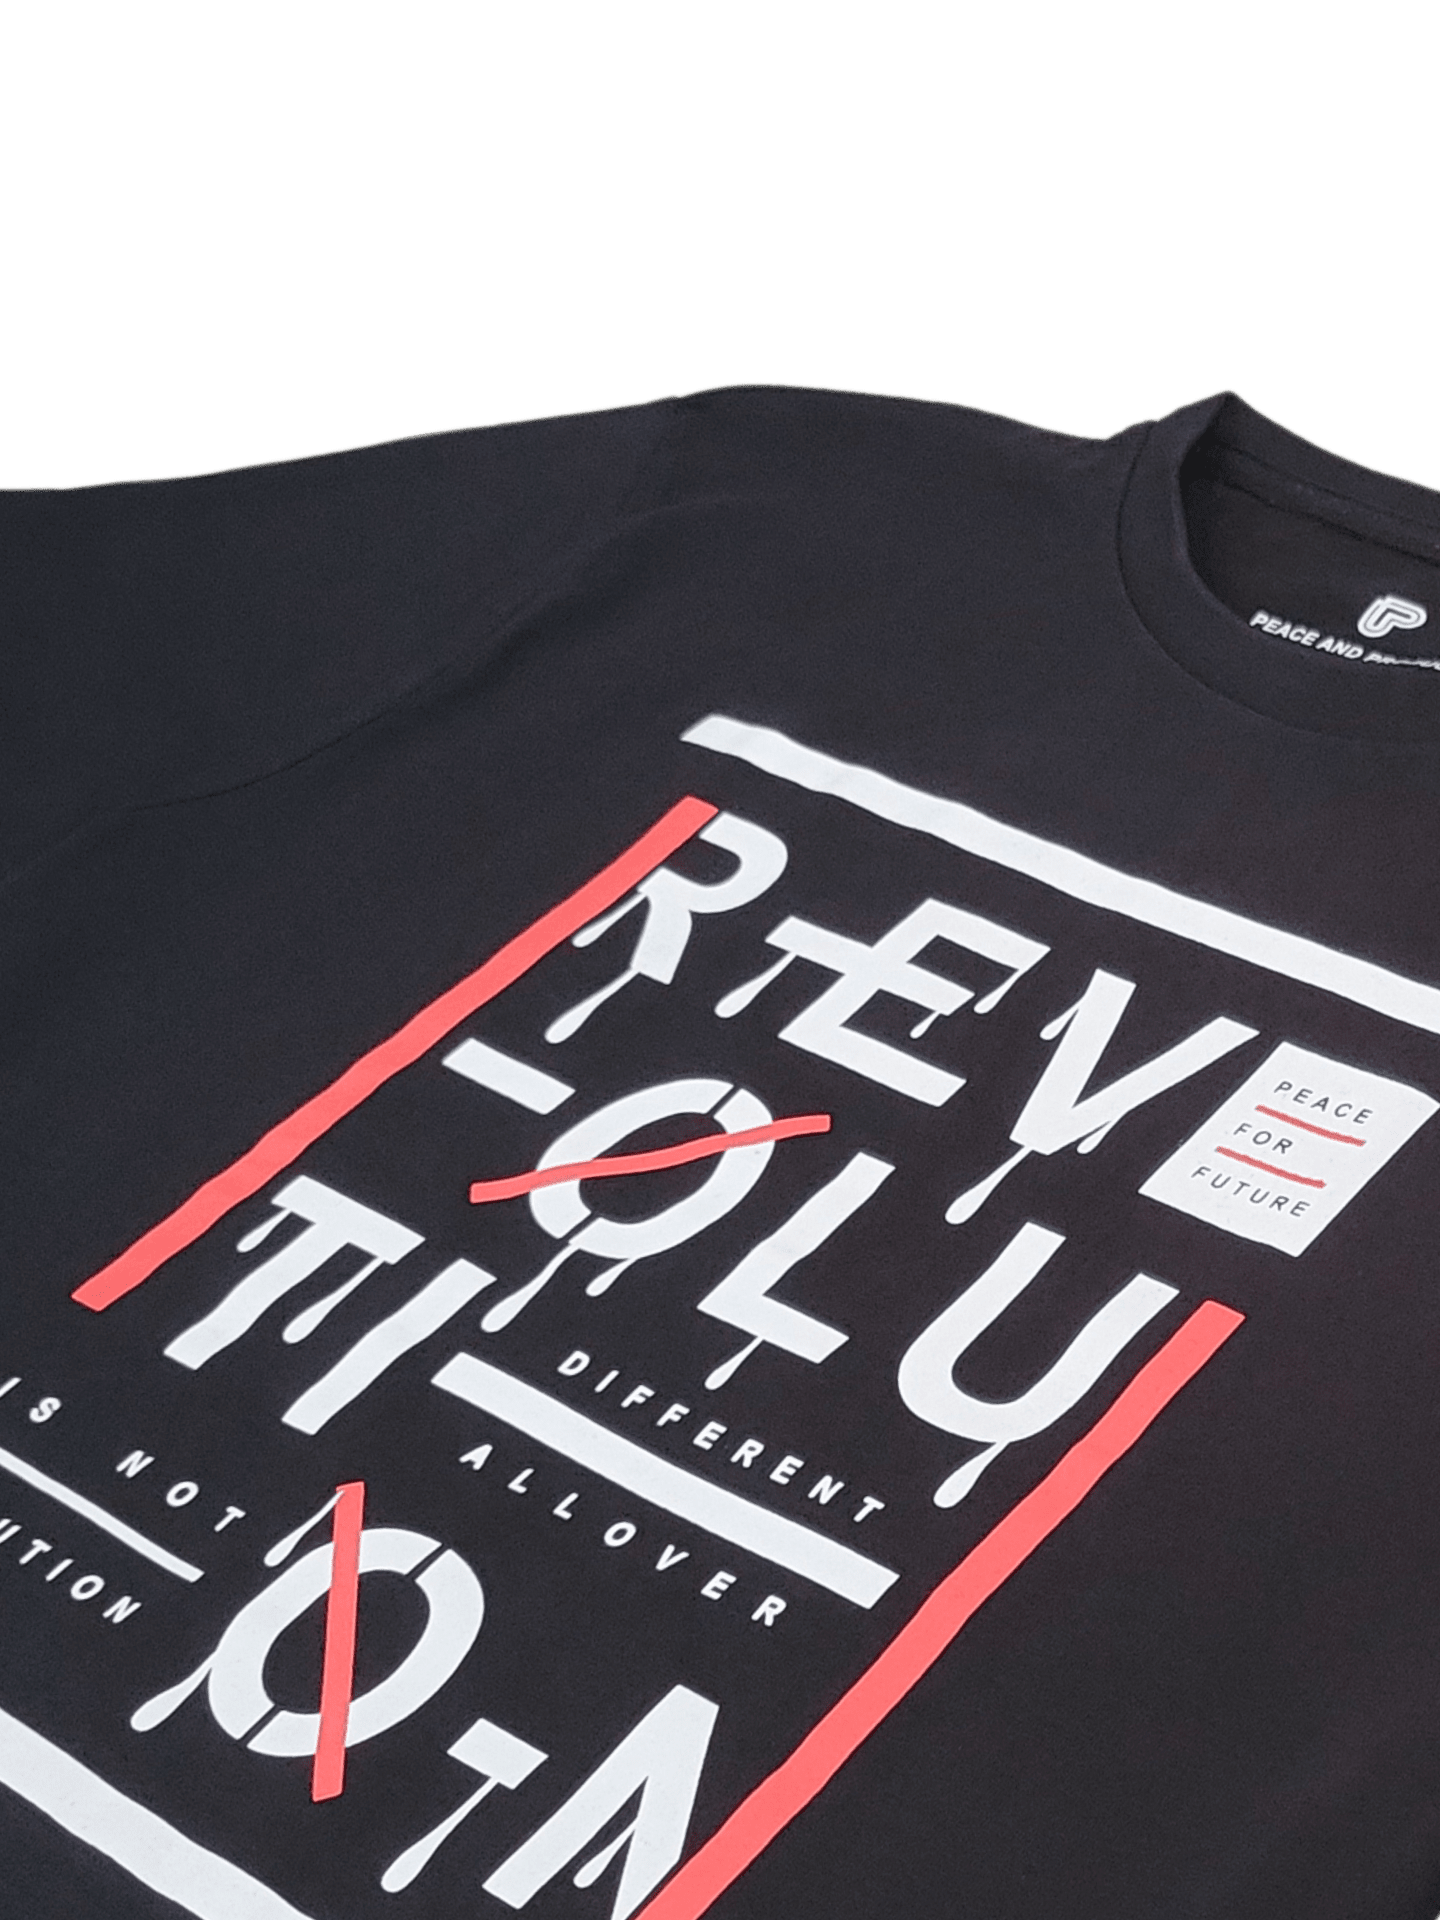 Revolution Combed Cotton Graphic T-shirt